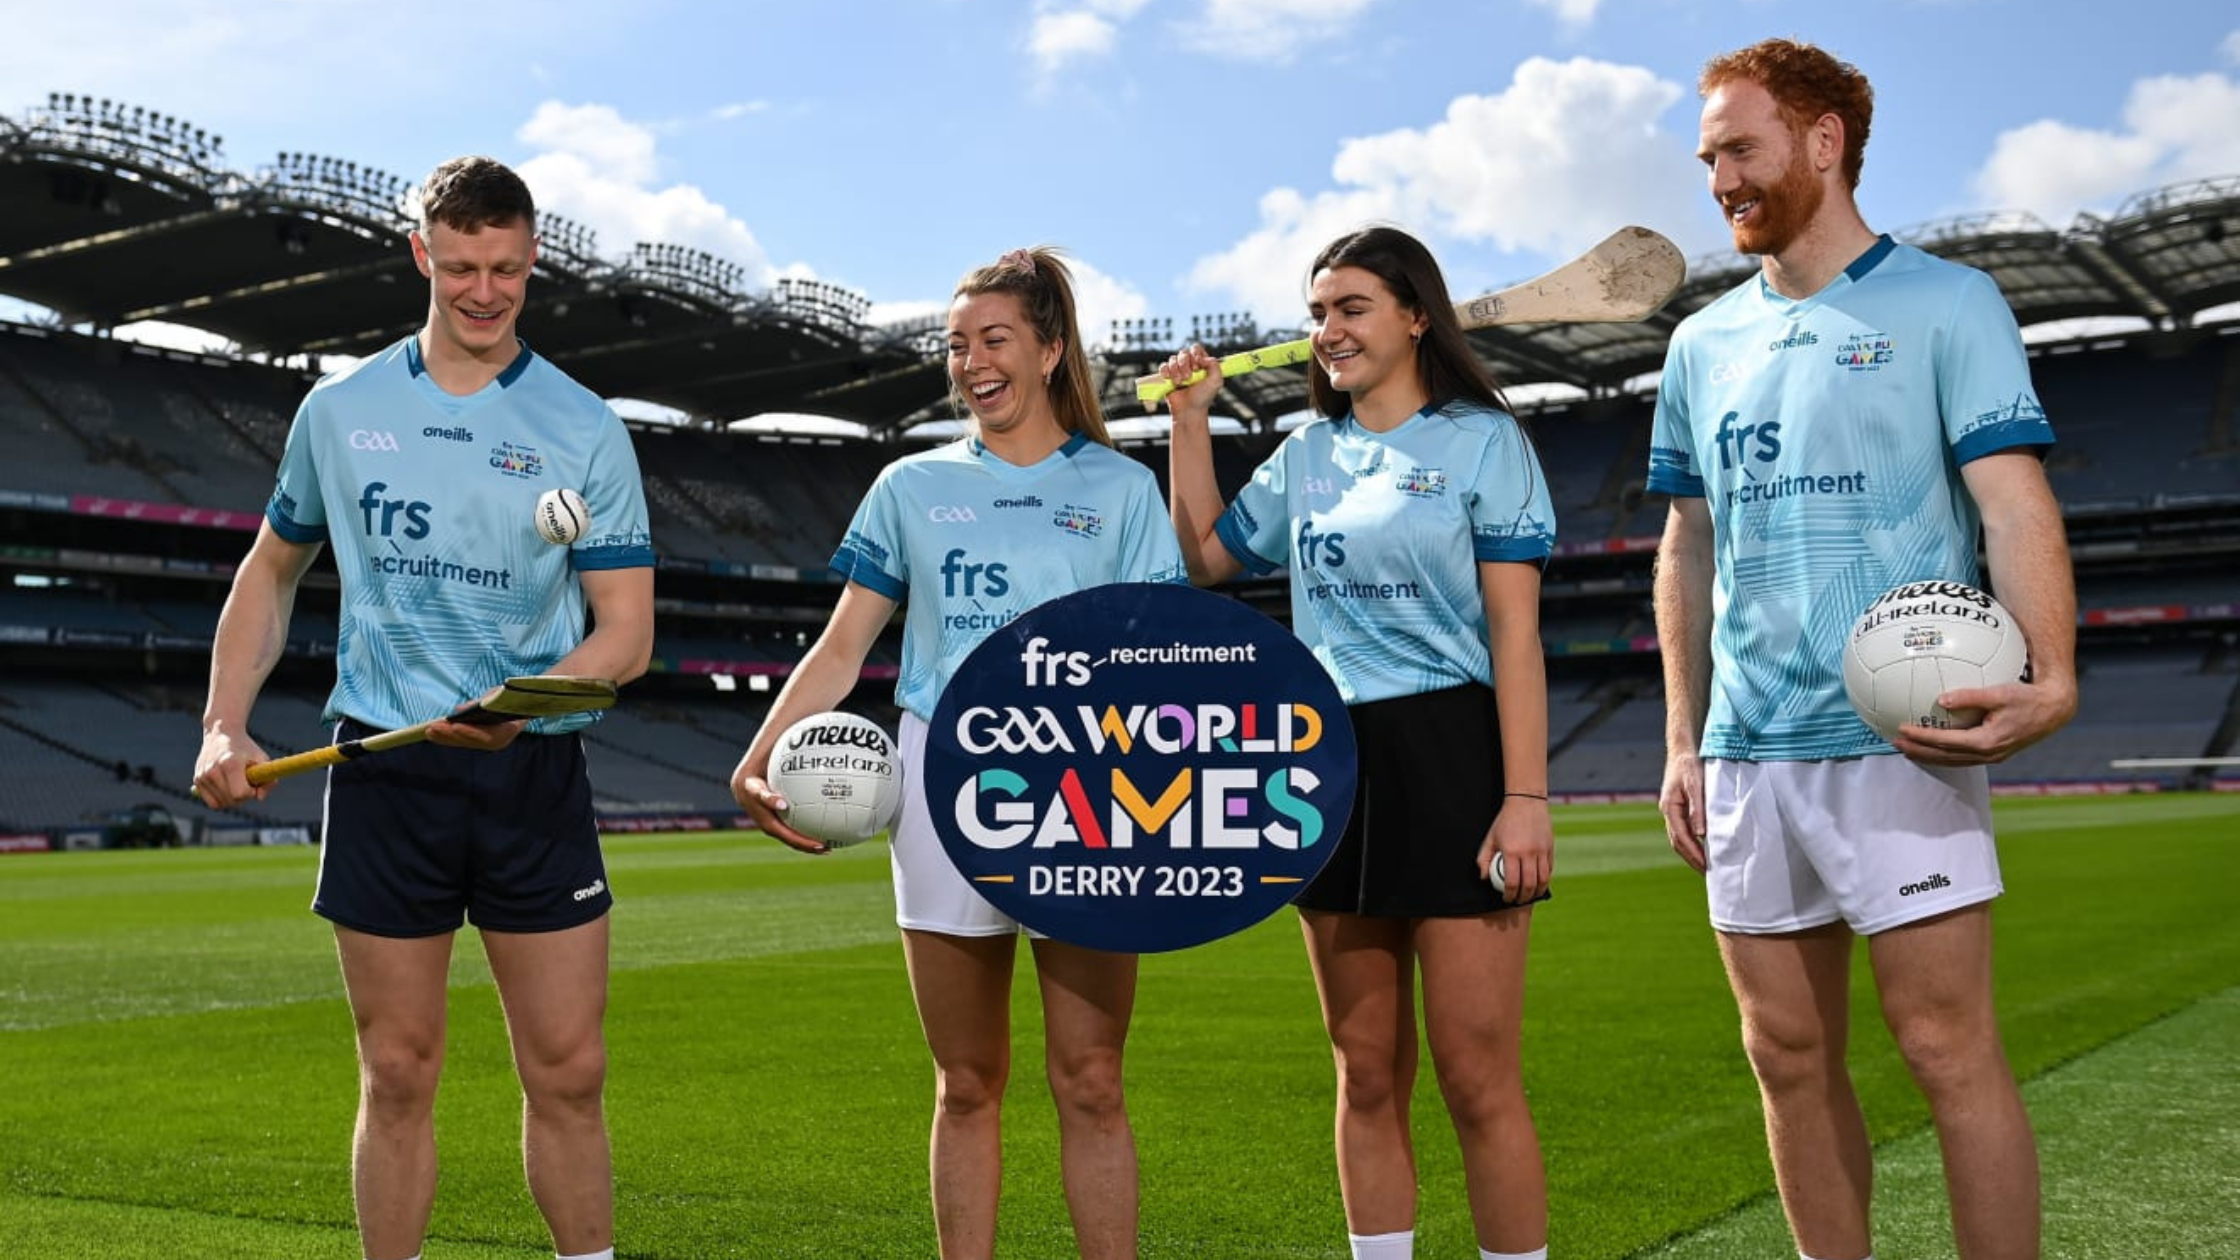 FRS Recruitment Announced as GAA World Games Sponsor